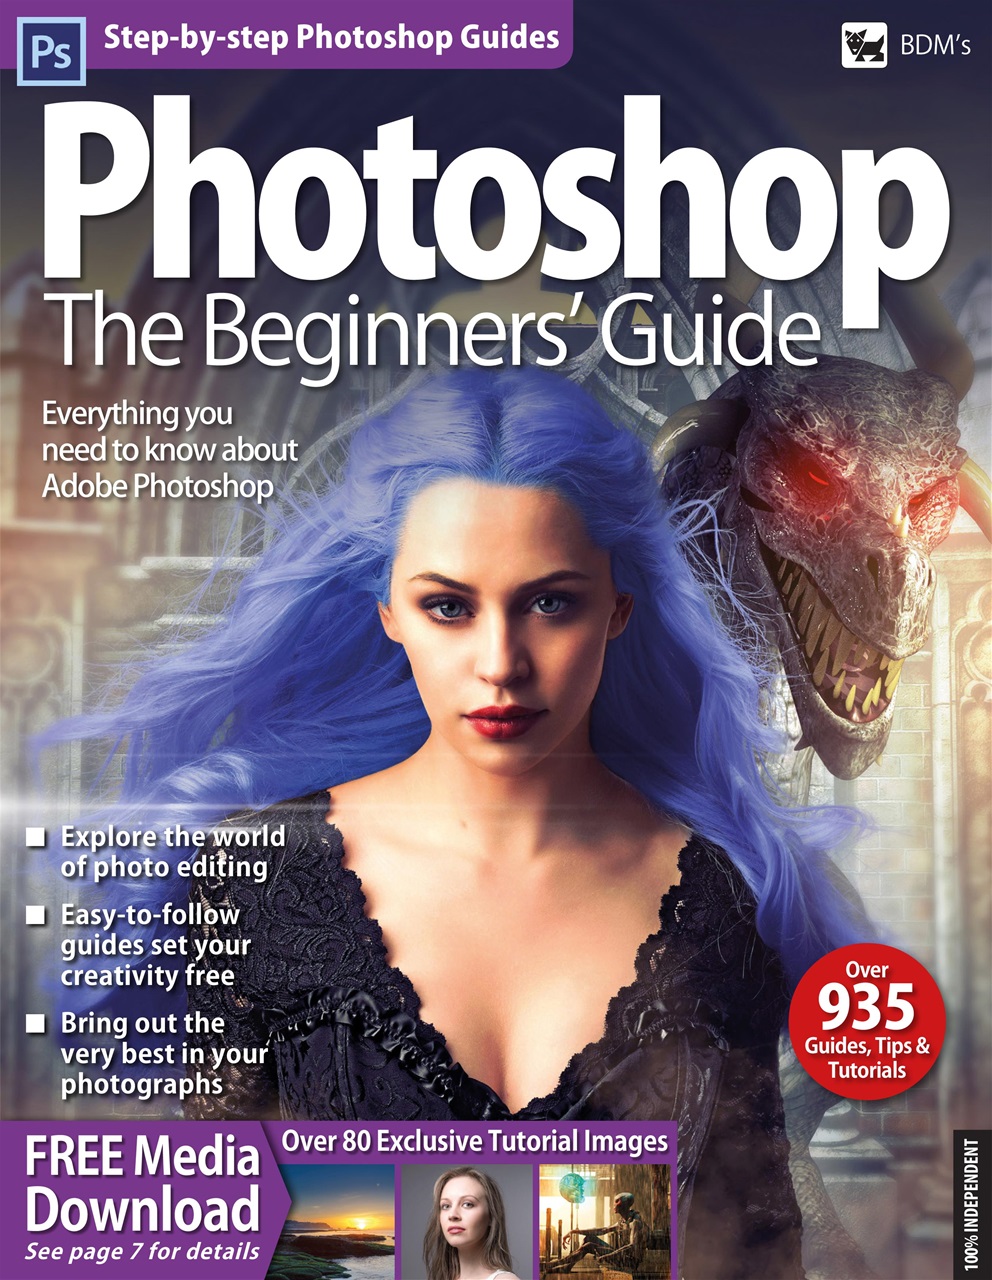 photoshop user magazine free download